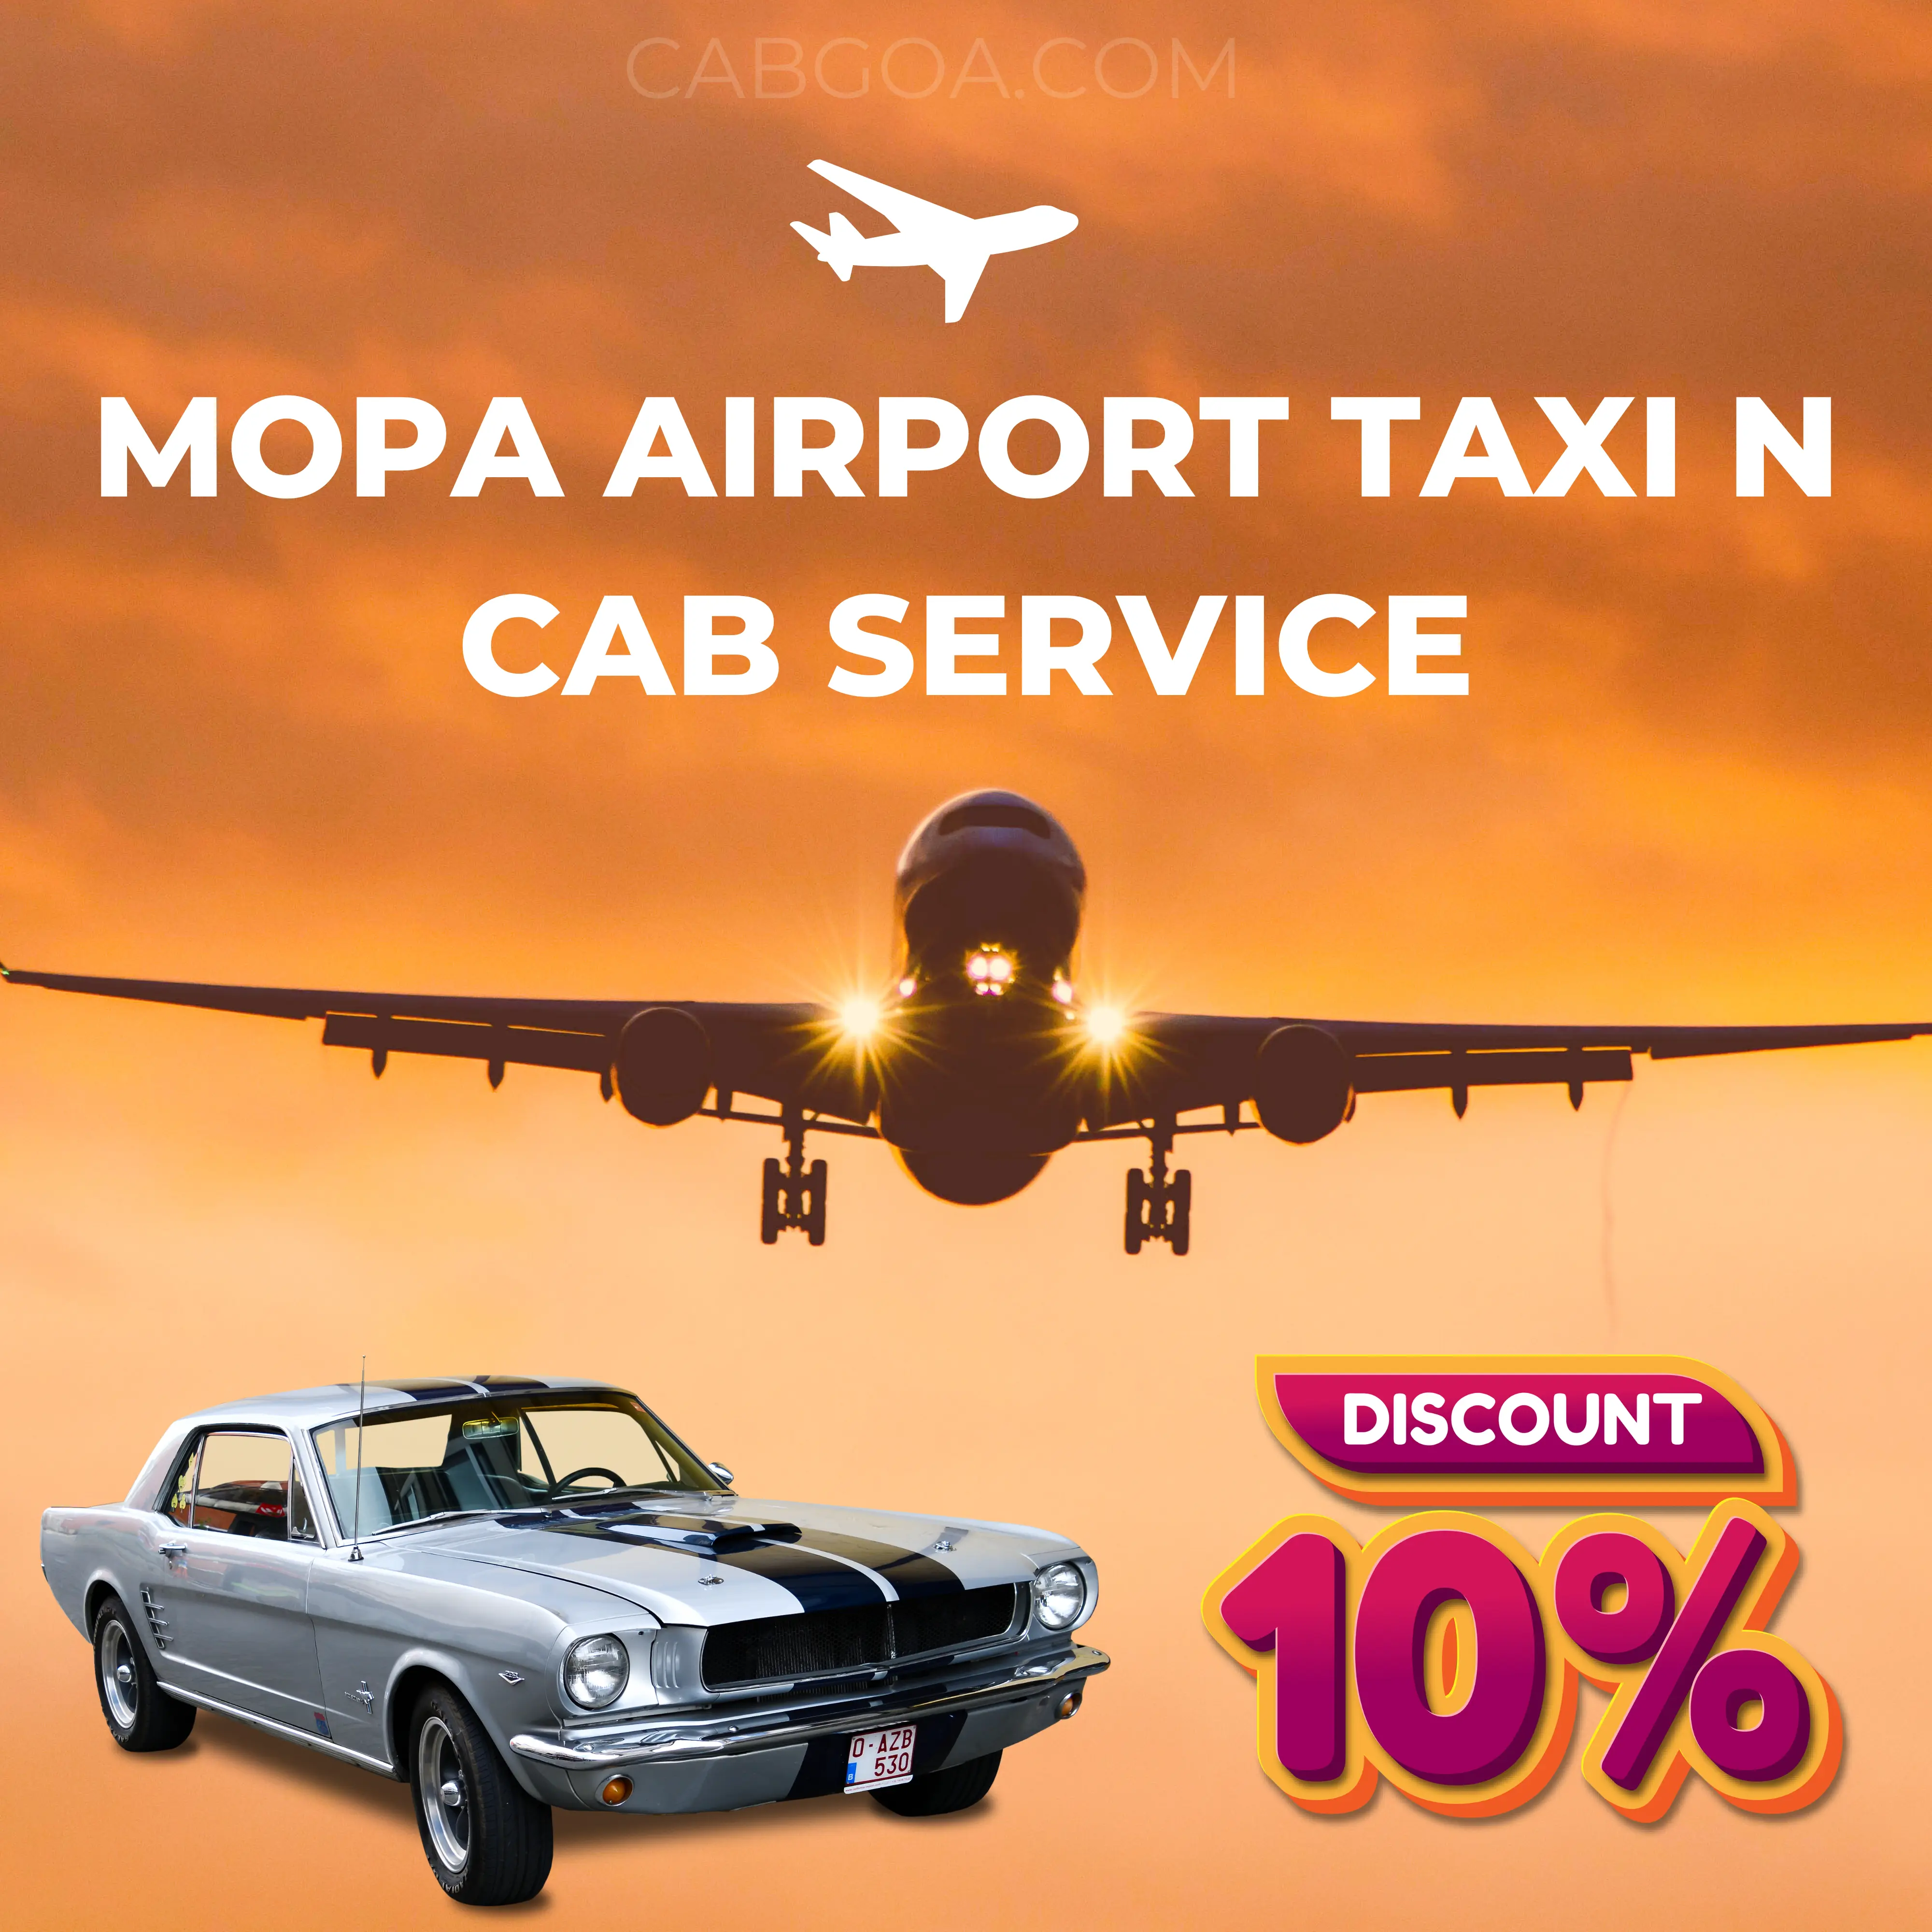 Mopa Airport Taxi N Cab Service